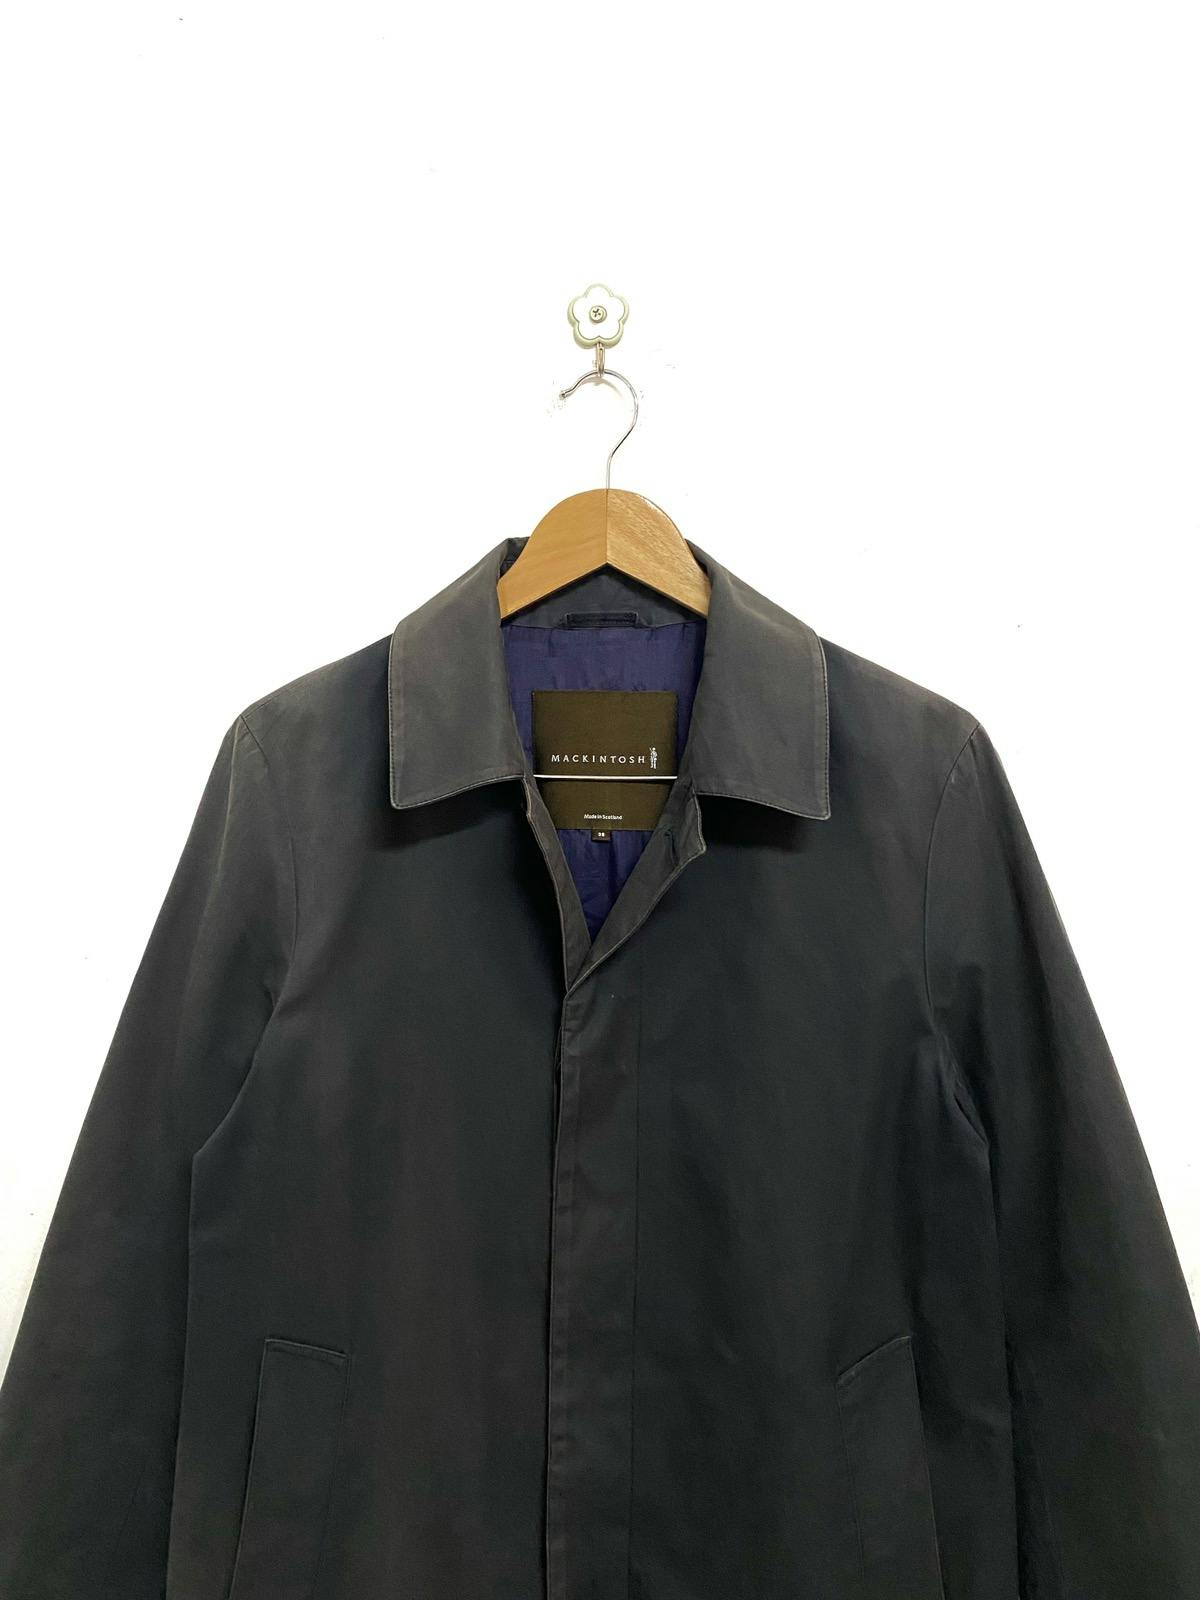 Mackintosh Philosophy Cotton Rubber Waterproof Long Jacket - 2